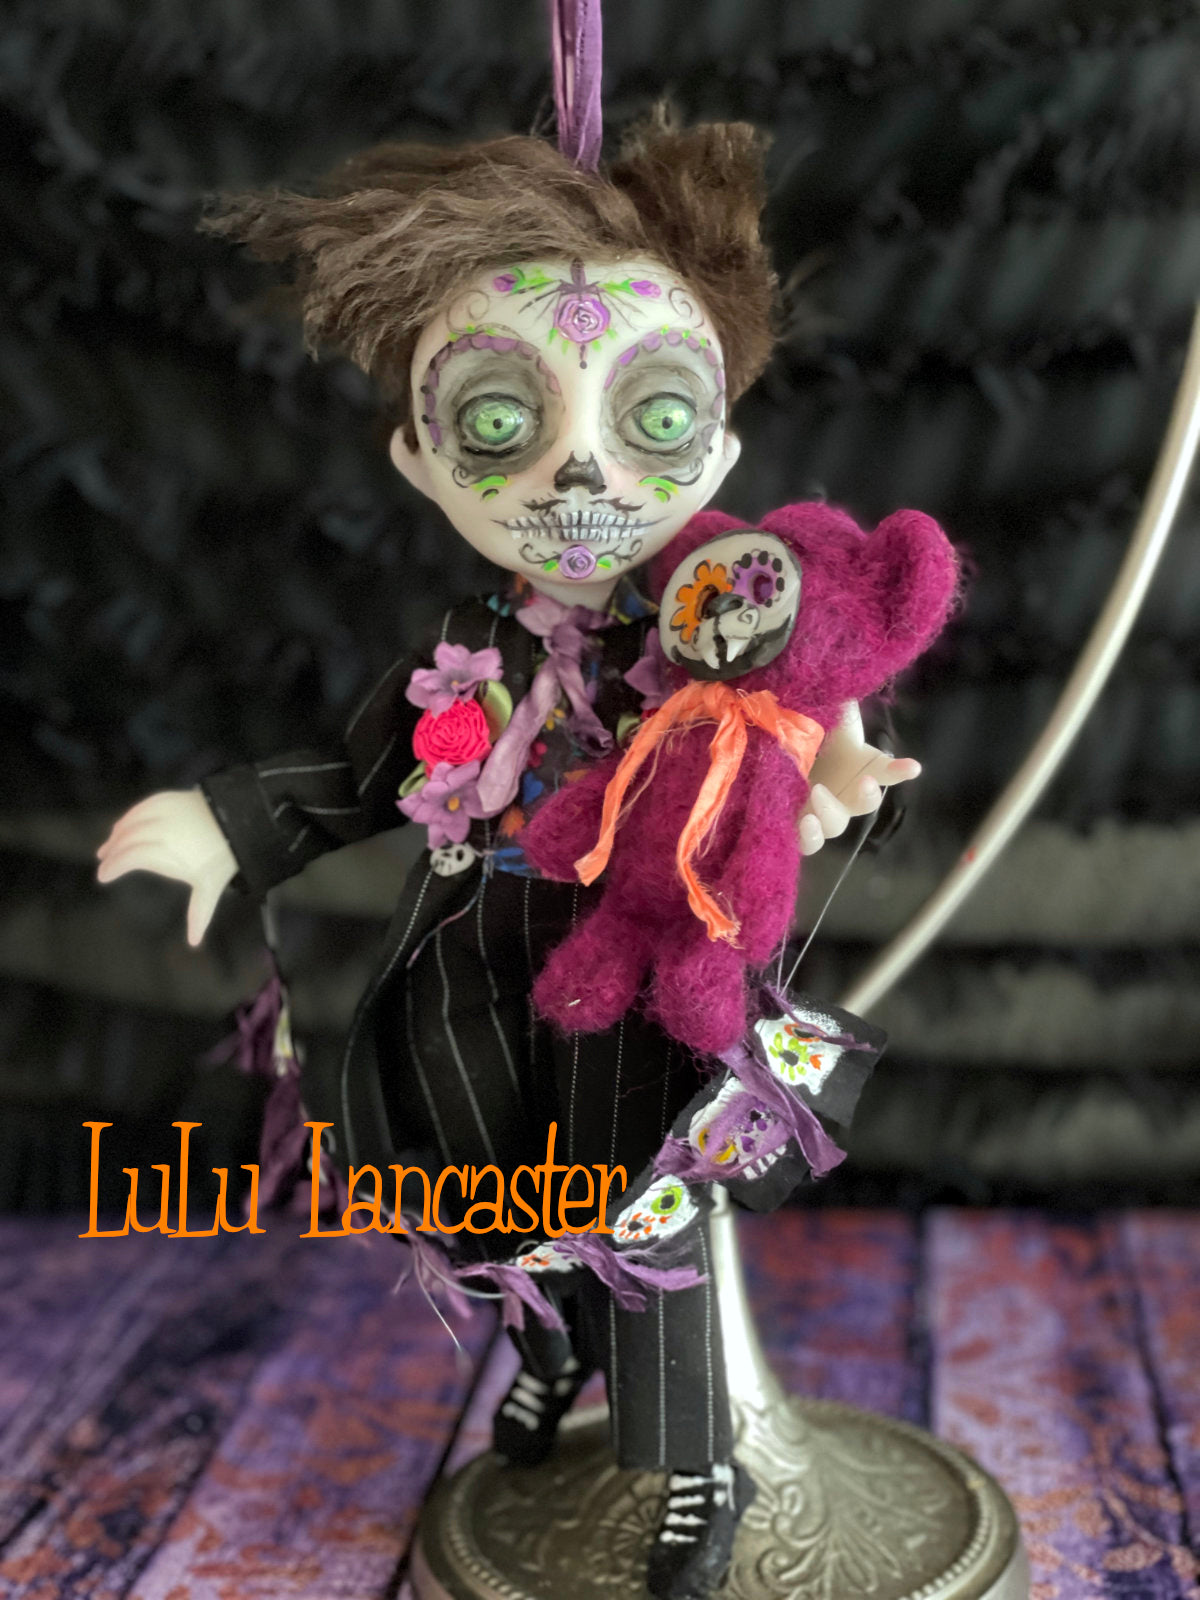 Crisanto hanging Day of the dead Original LuLu Lancaster Halloween Art Doll